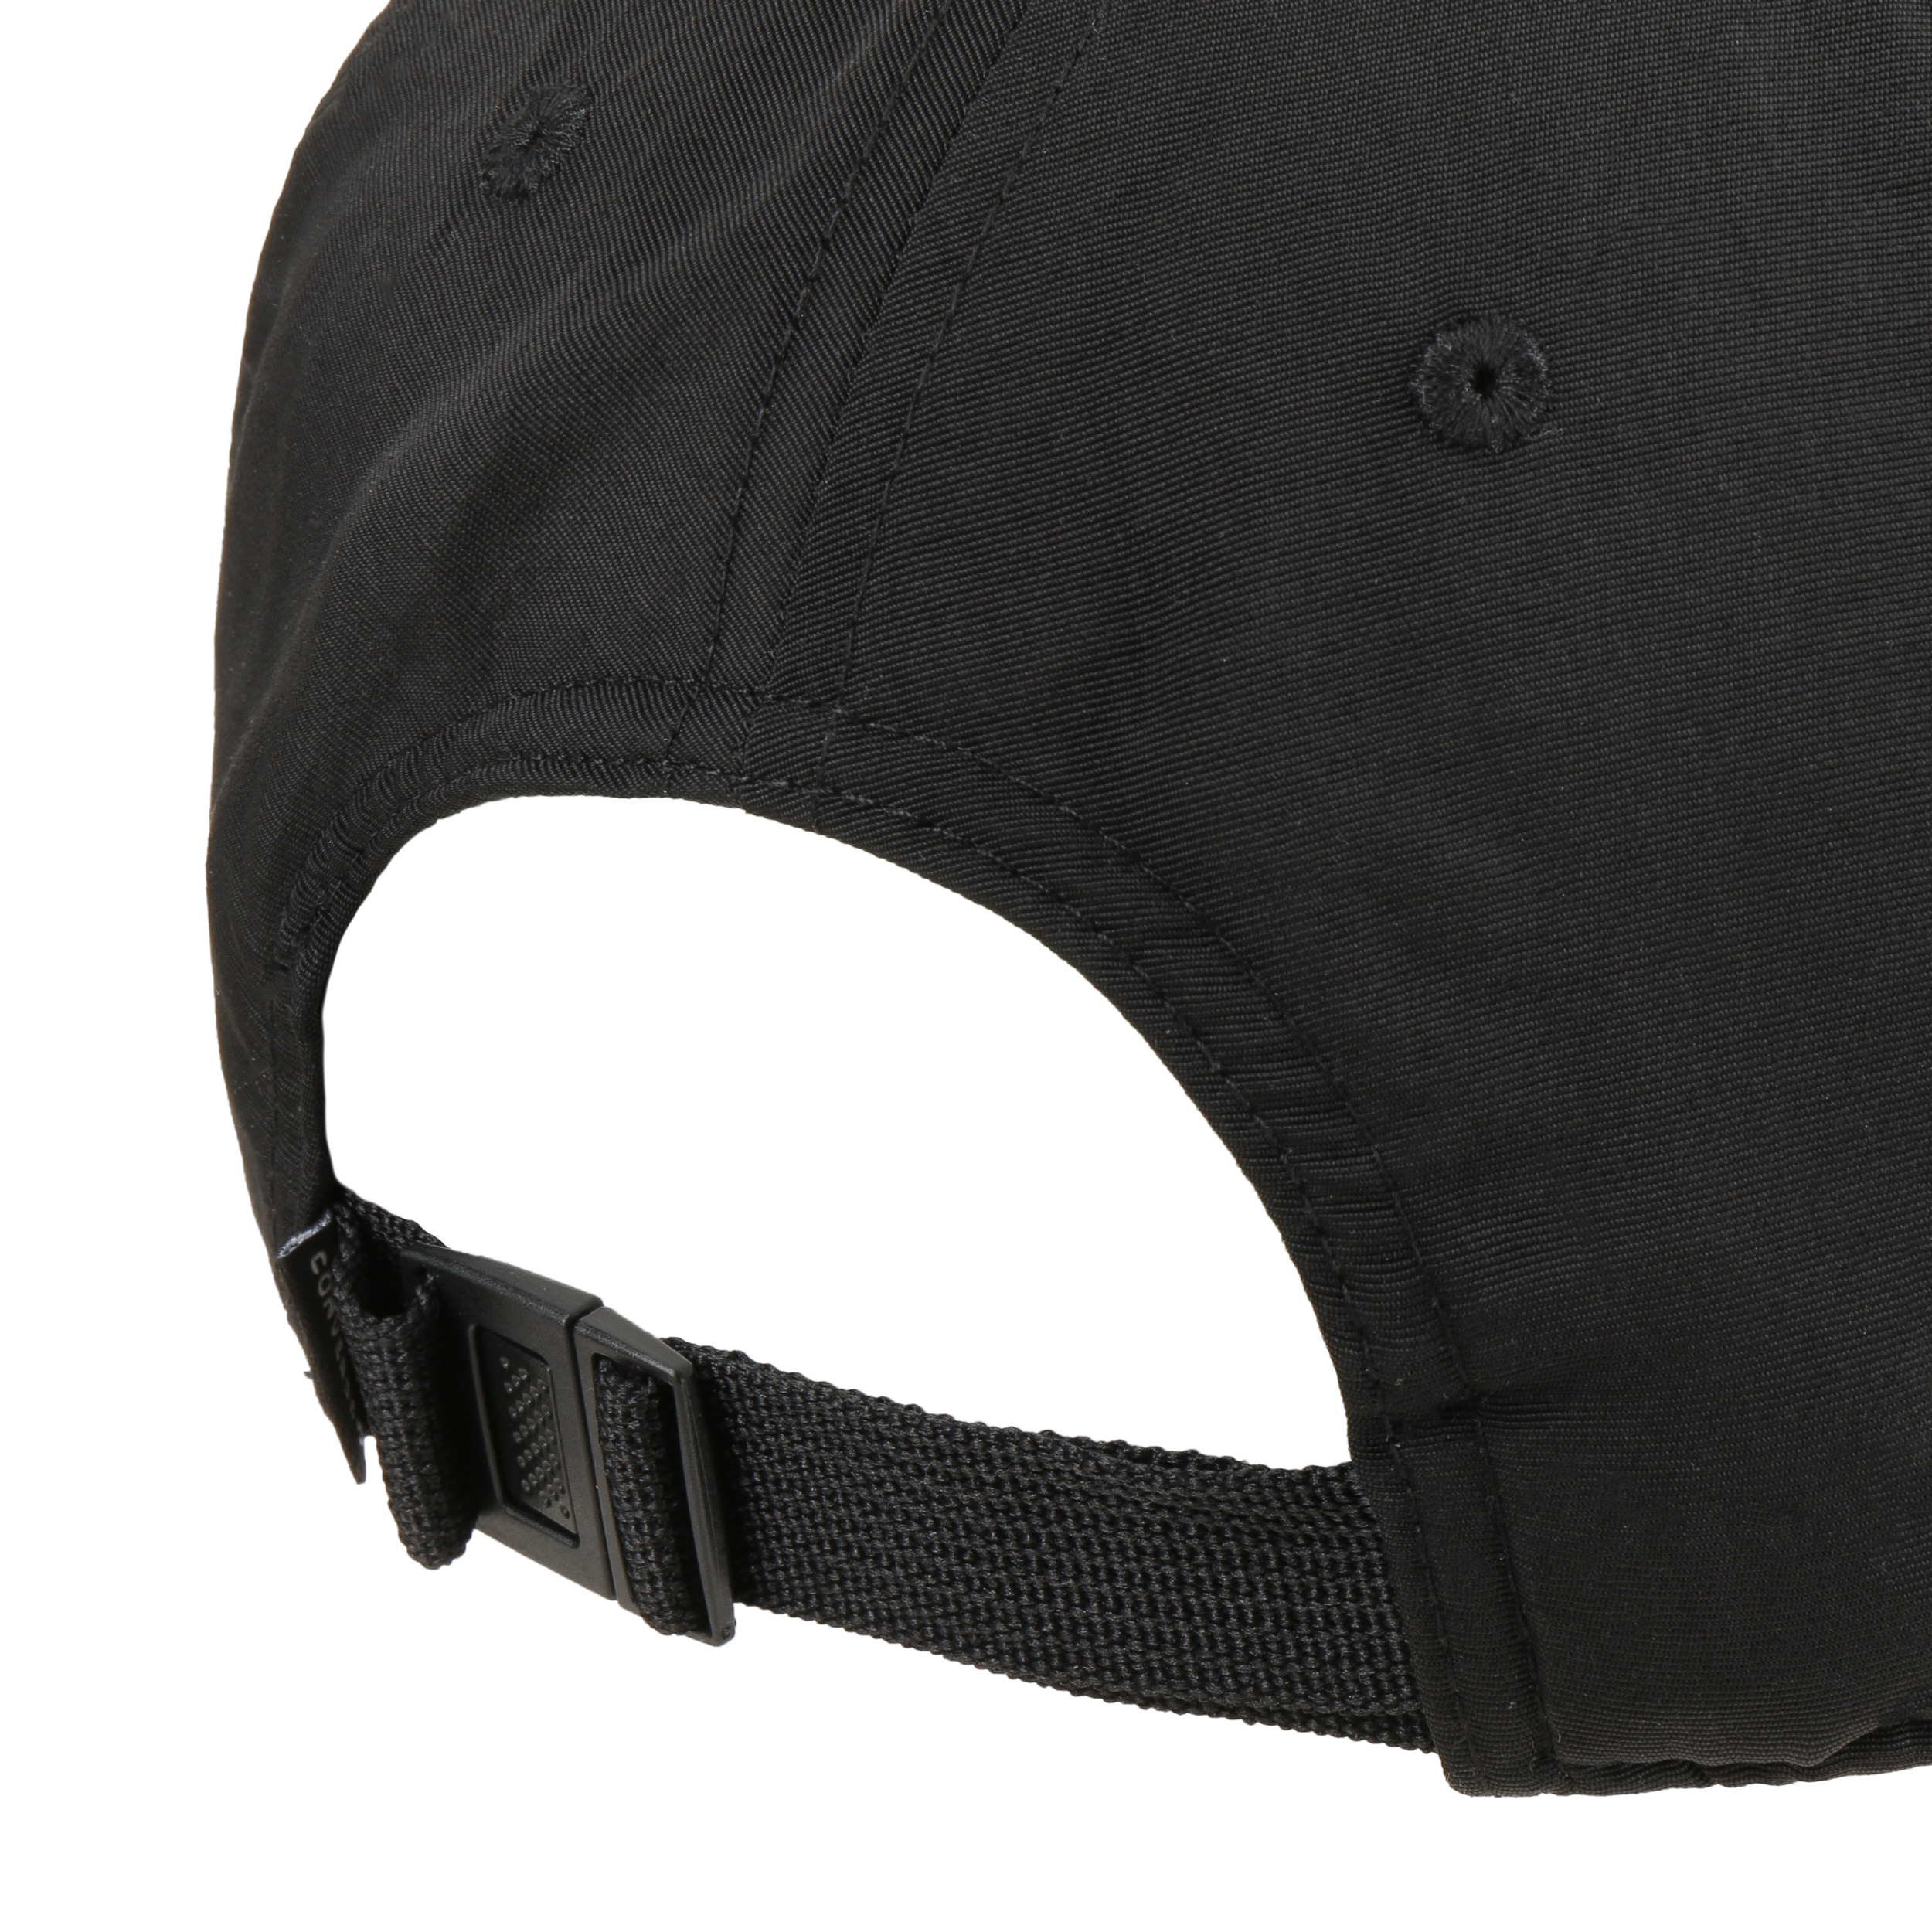 Lock Up Baseball Black/White Adjustable - Converse cap